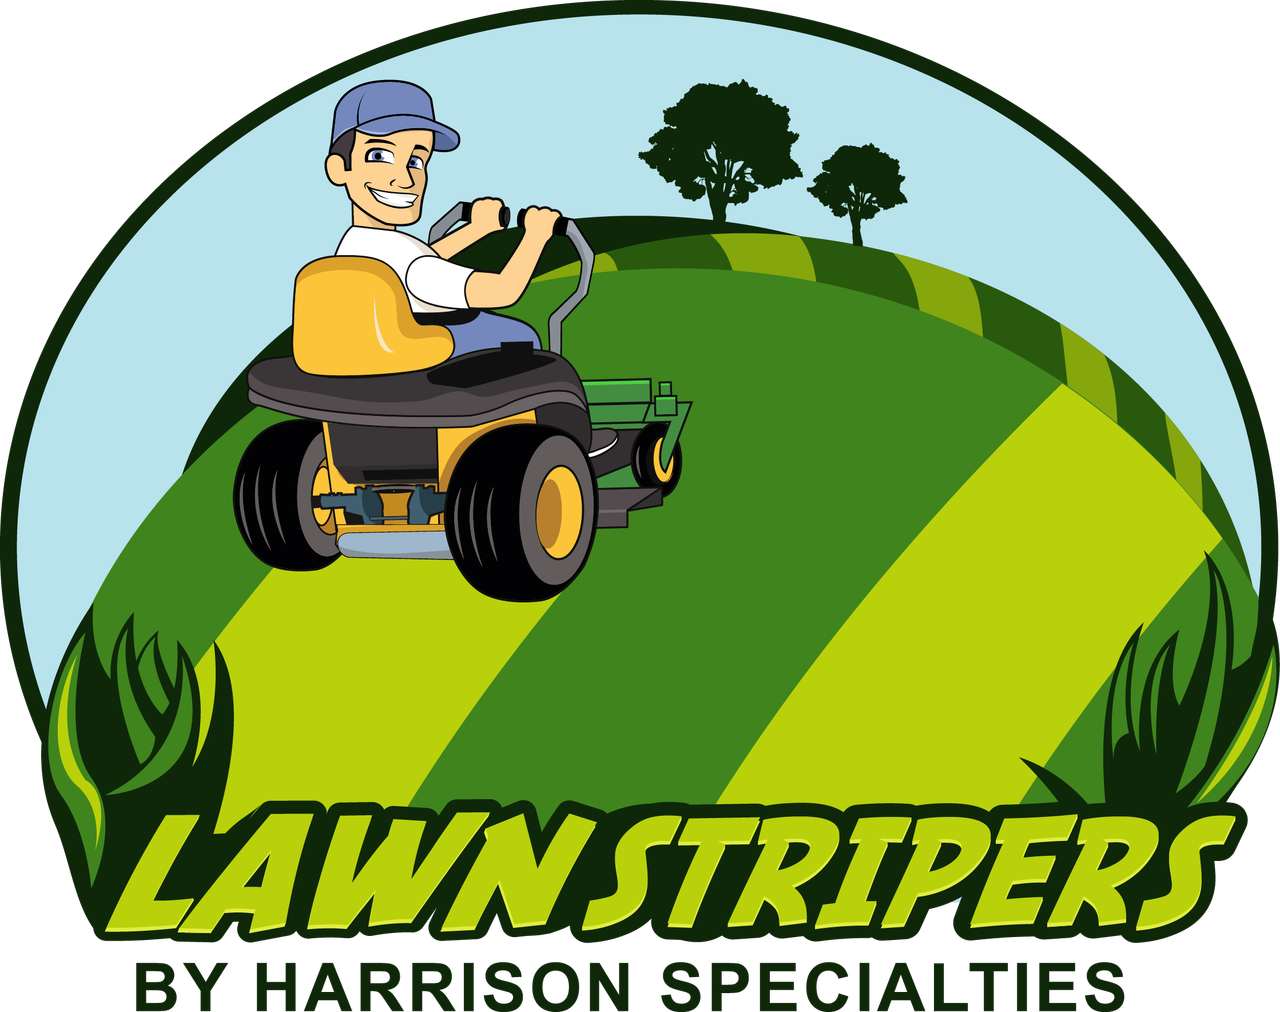 Lawn Striper 2016 John Deere 960R with 60" 7-Iron Deck